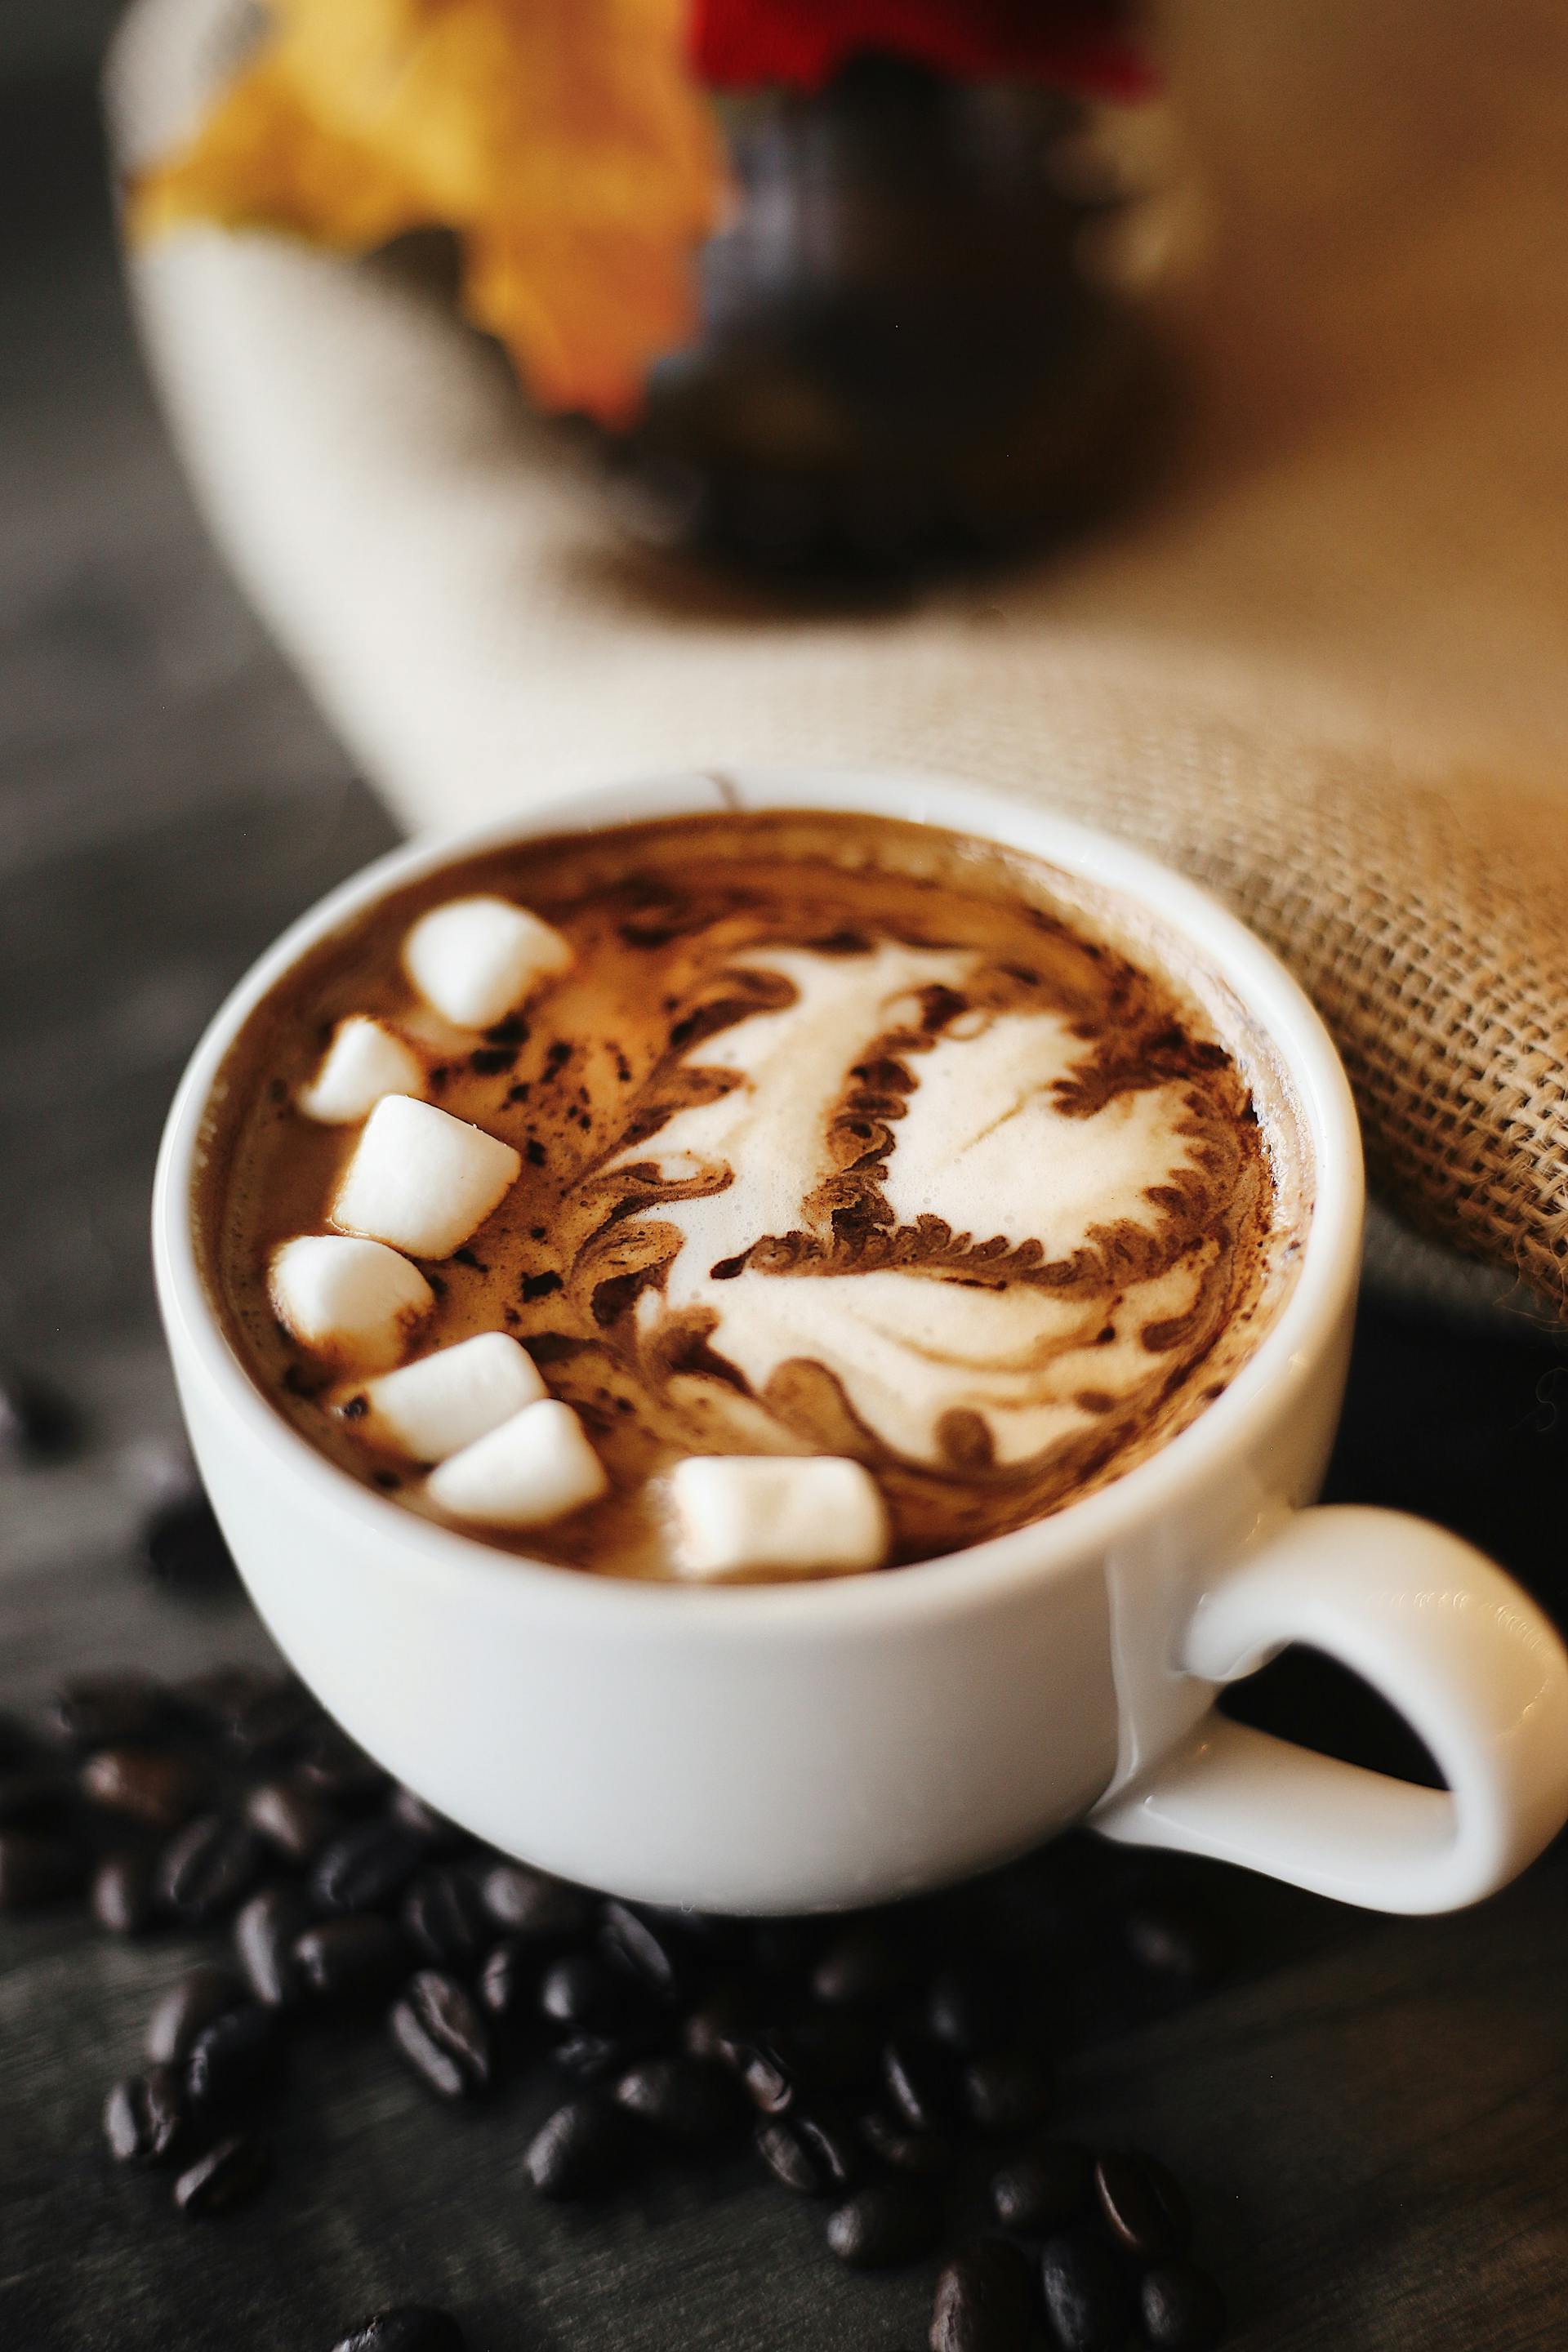 A mug of hot chocolate | Source: Pexels